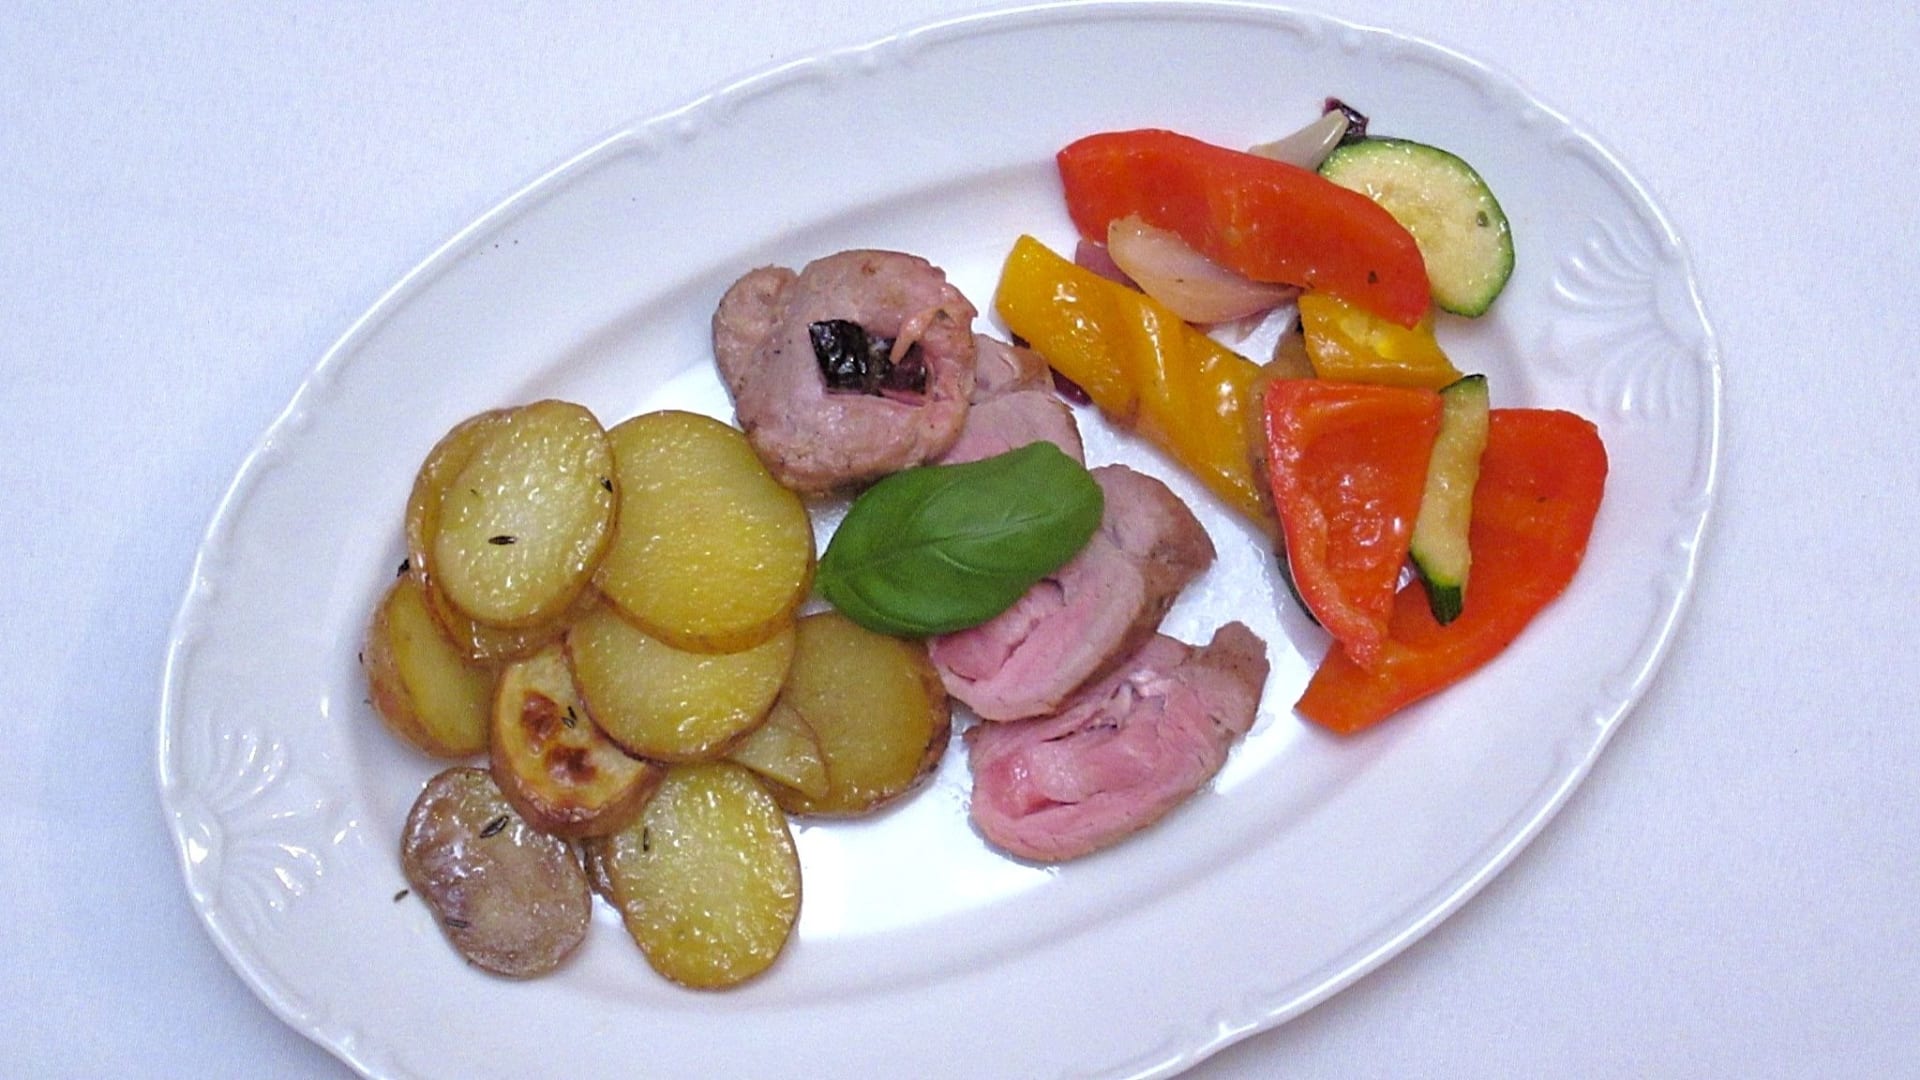 Špikovaná vepřová panenka, pečený brambor, grilovaná zelenina